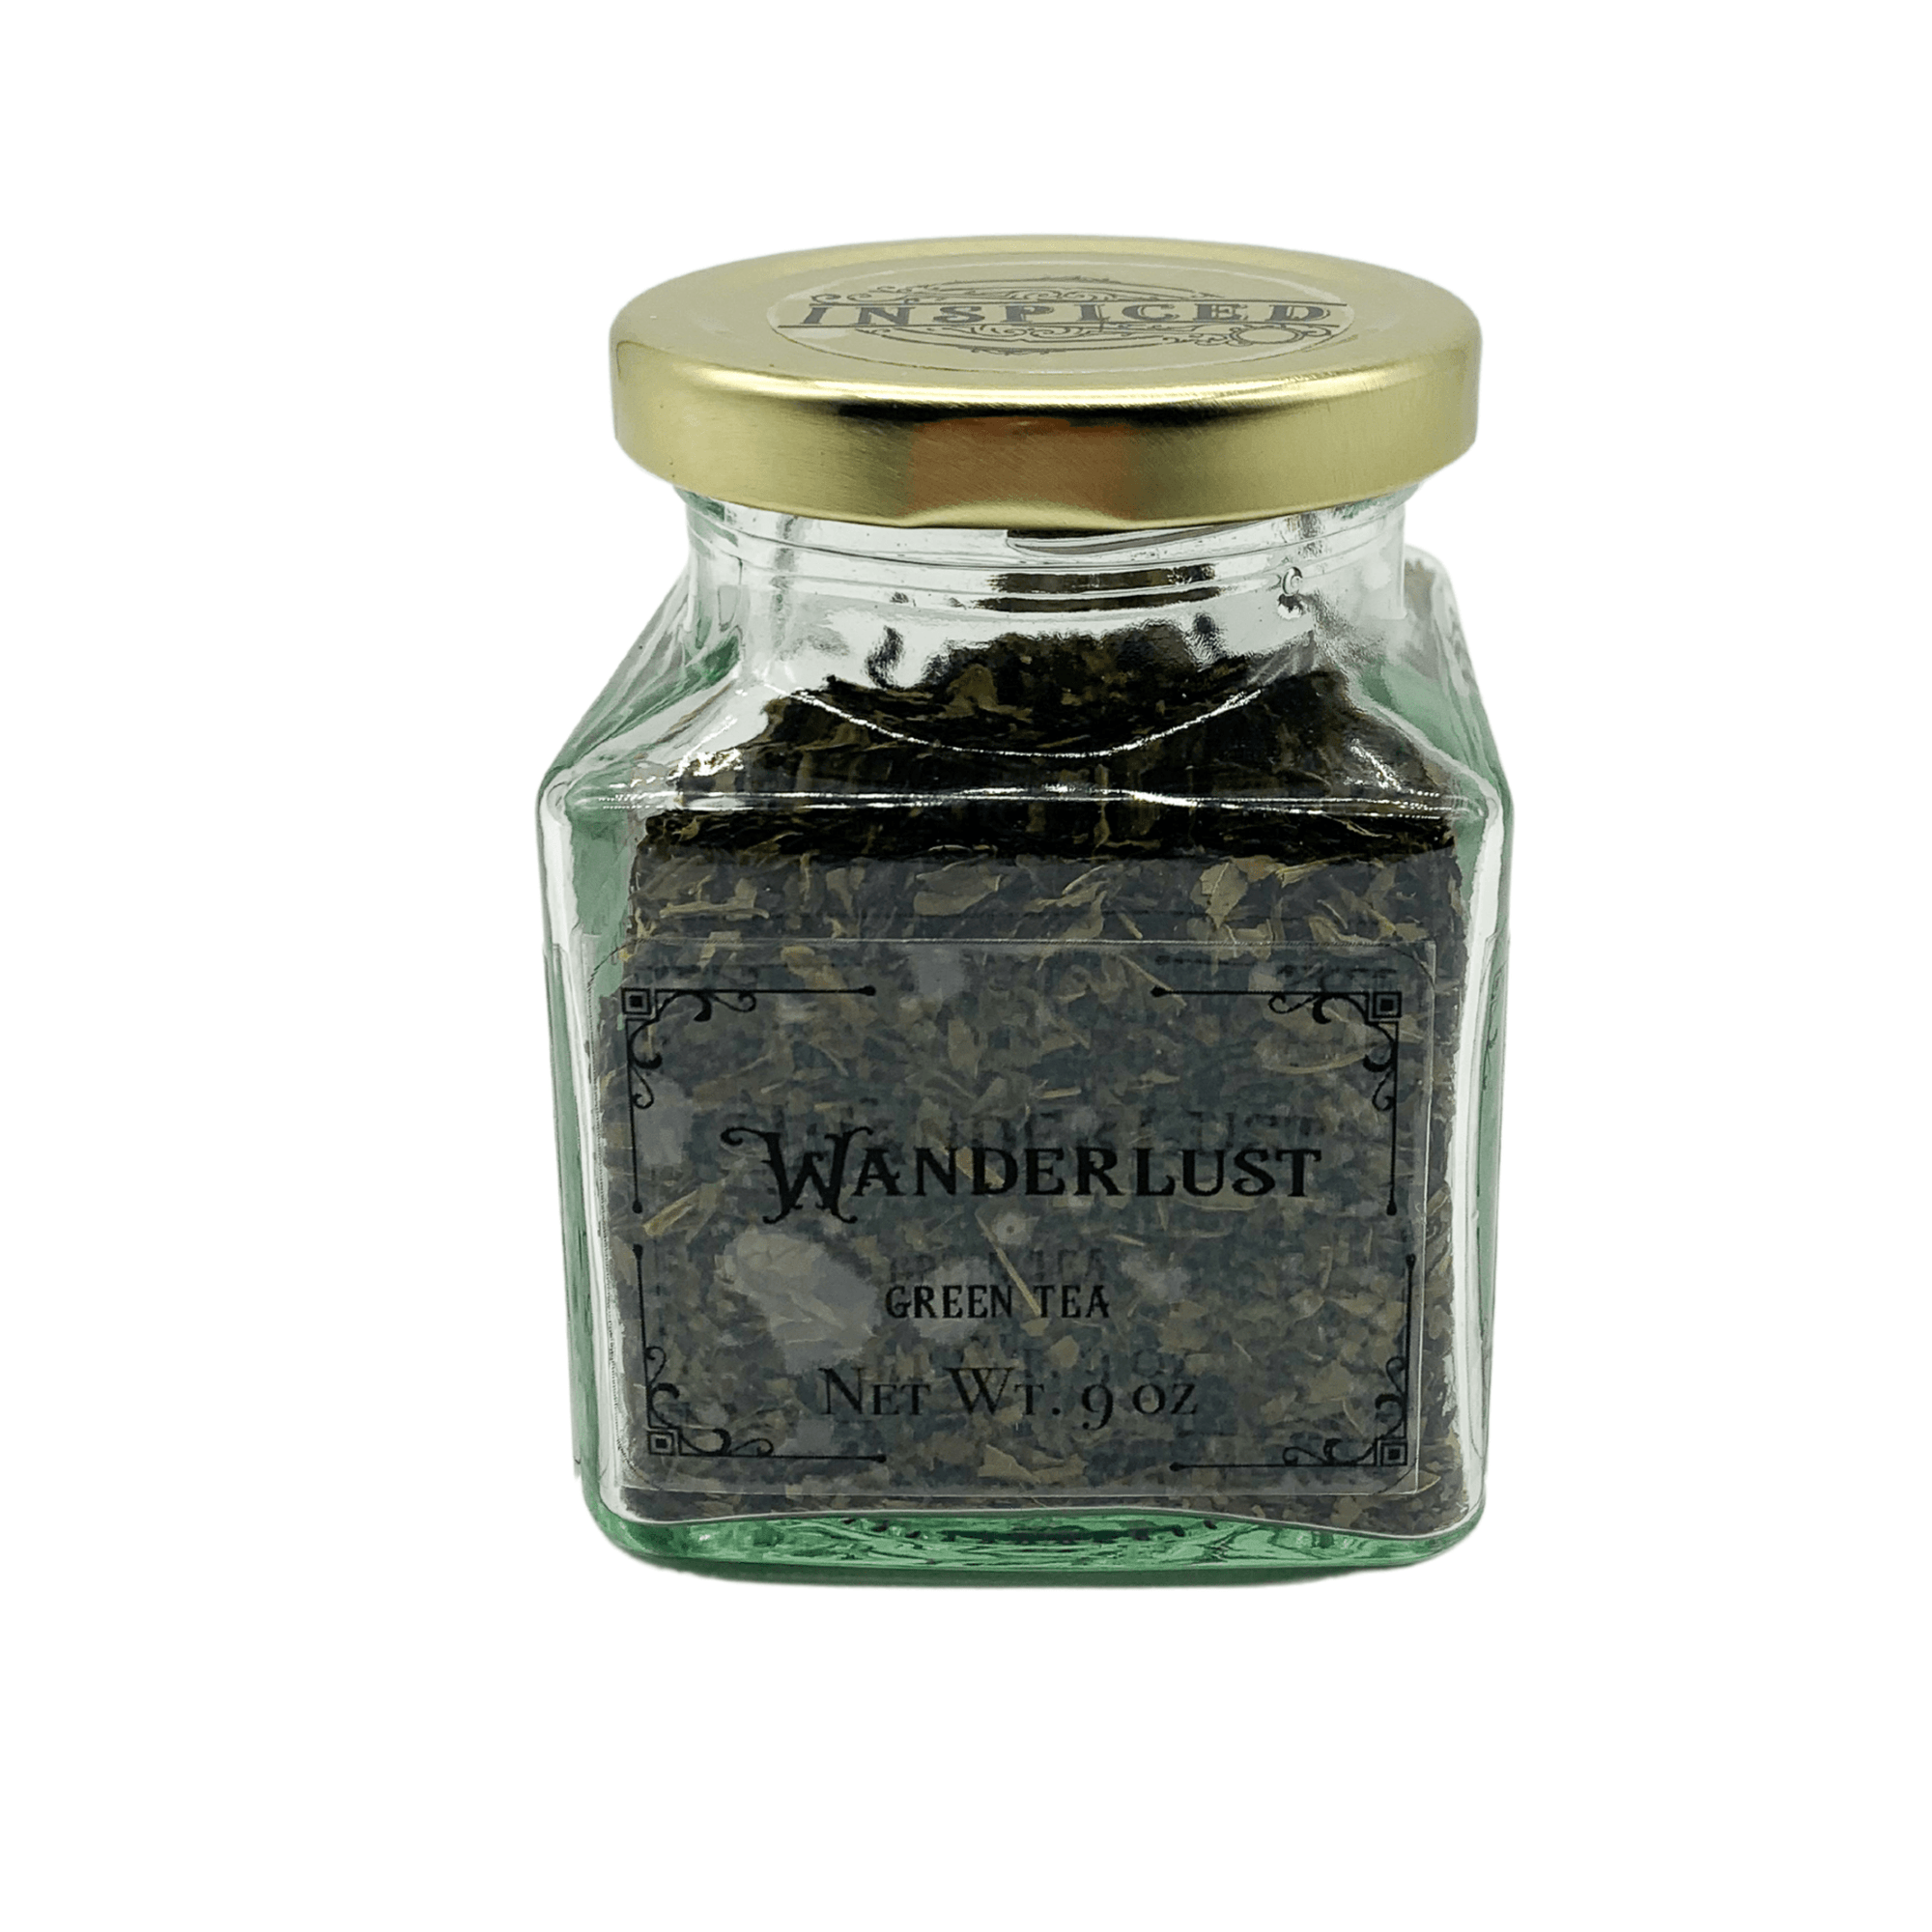 Wanderlust Tea - Inspiced.com